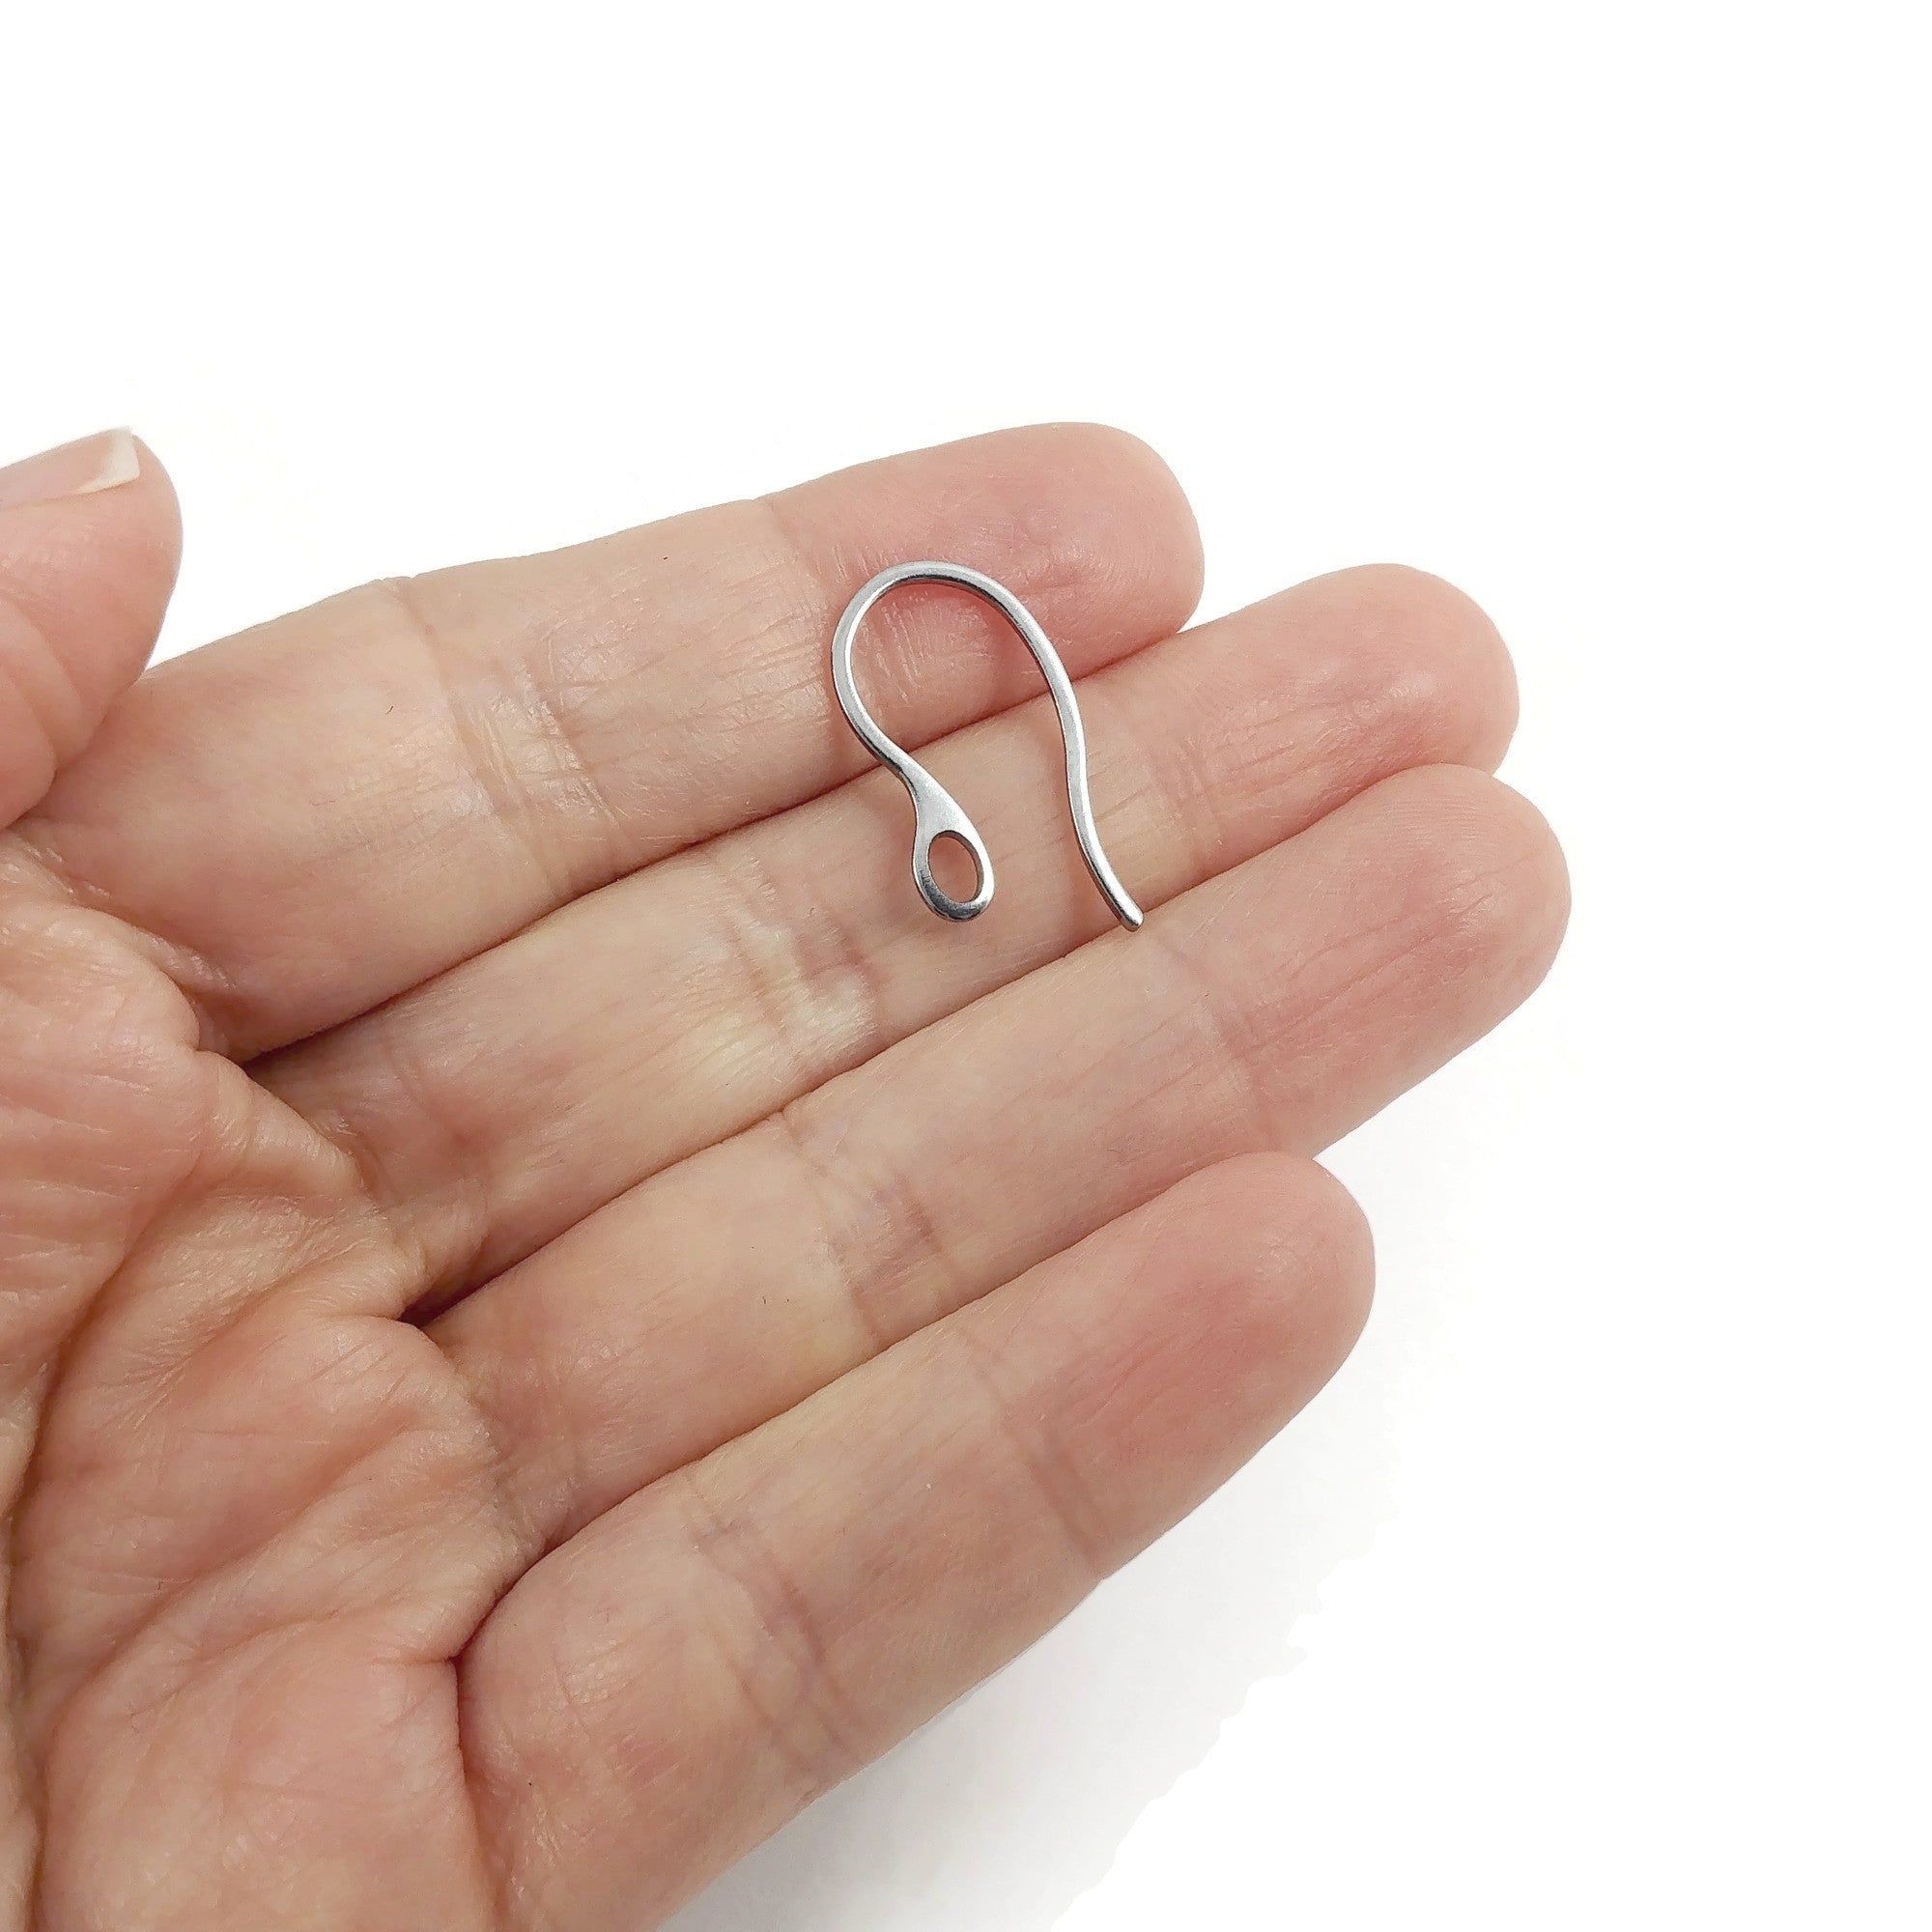 Stainless steel earring hooks 10 pcs (5 pairs) Hypoallergenic